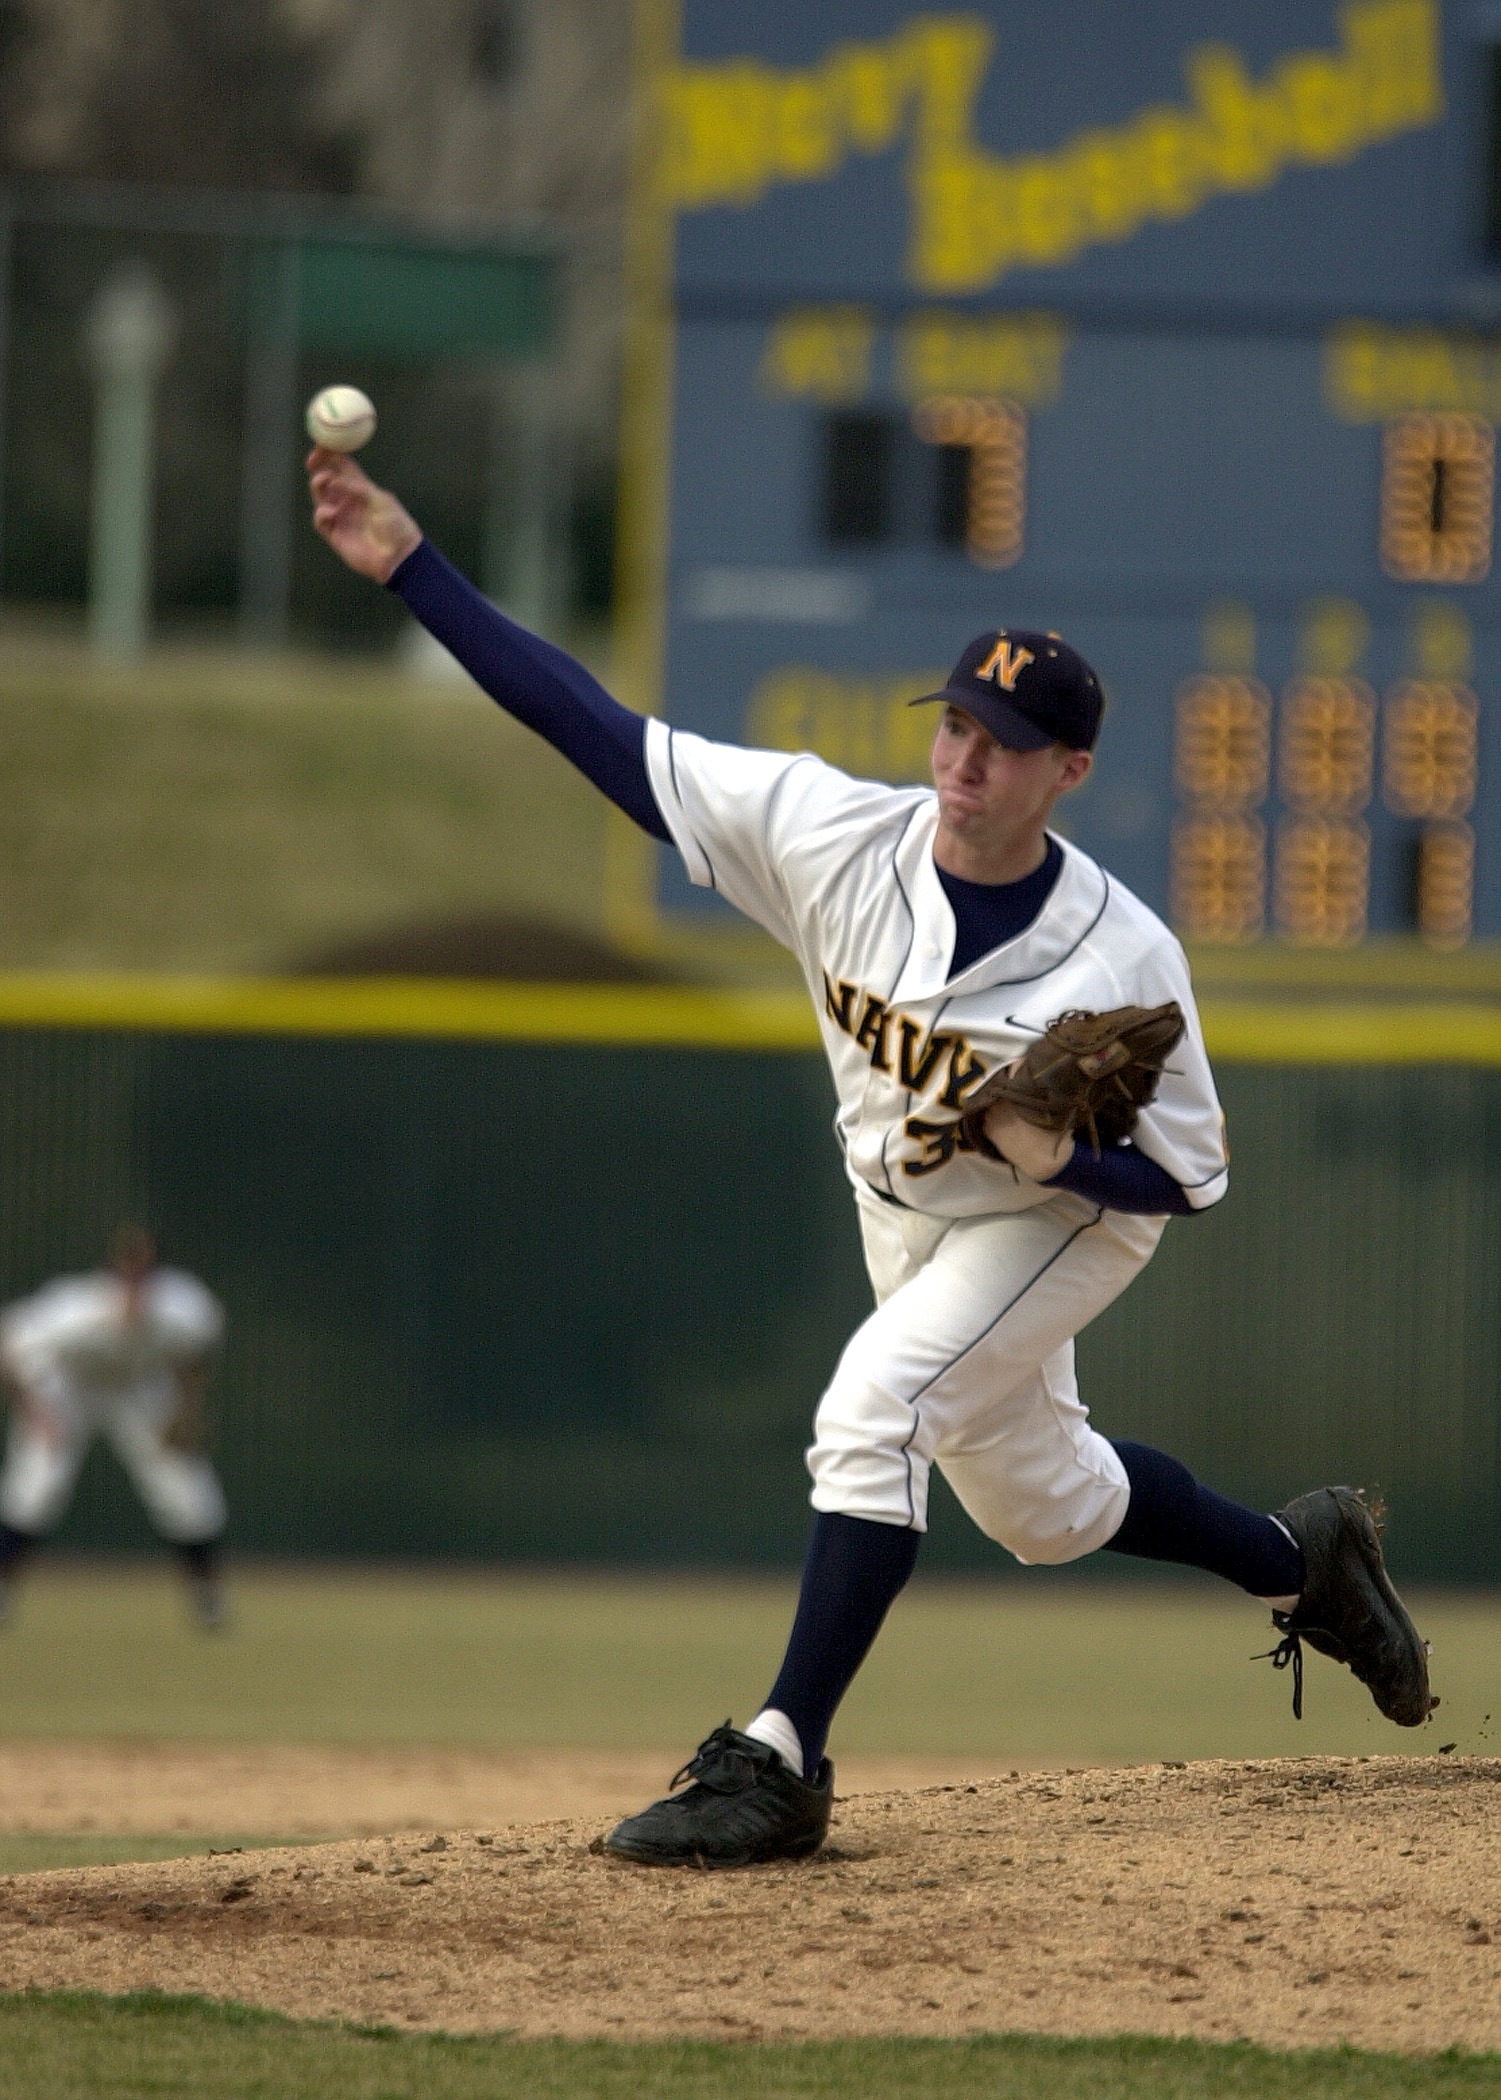 Navy Baseball player running to catch ball